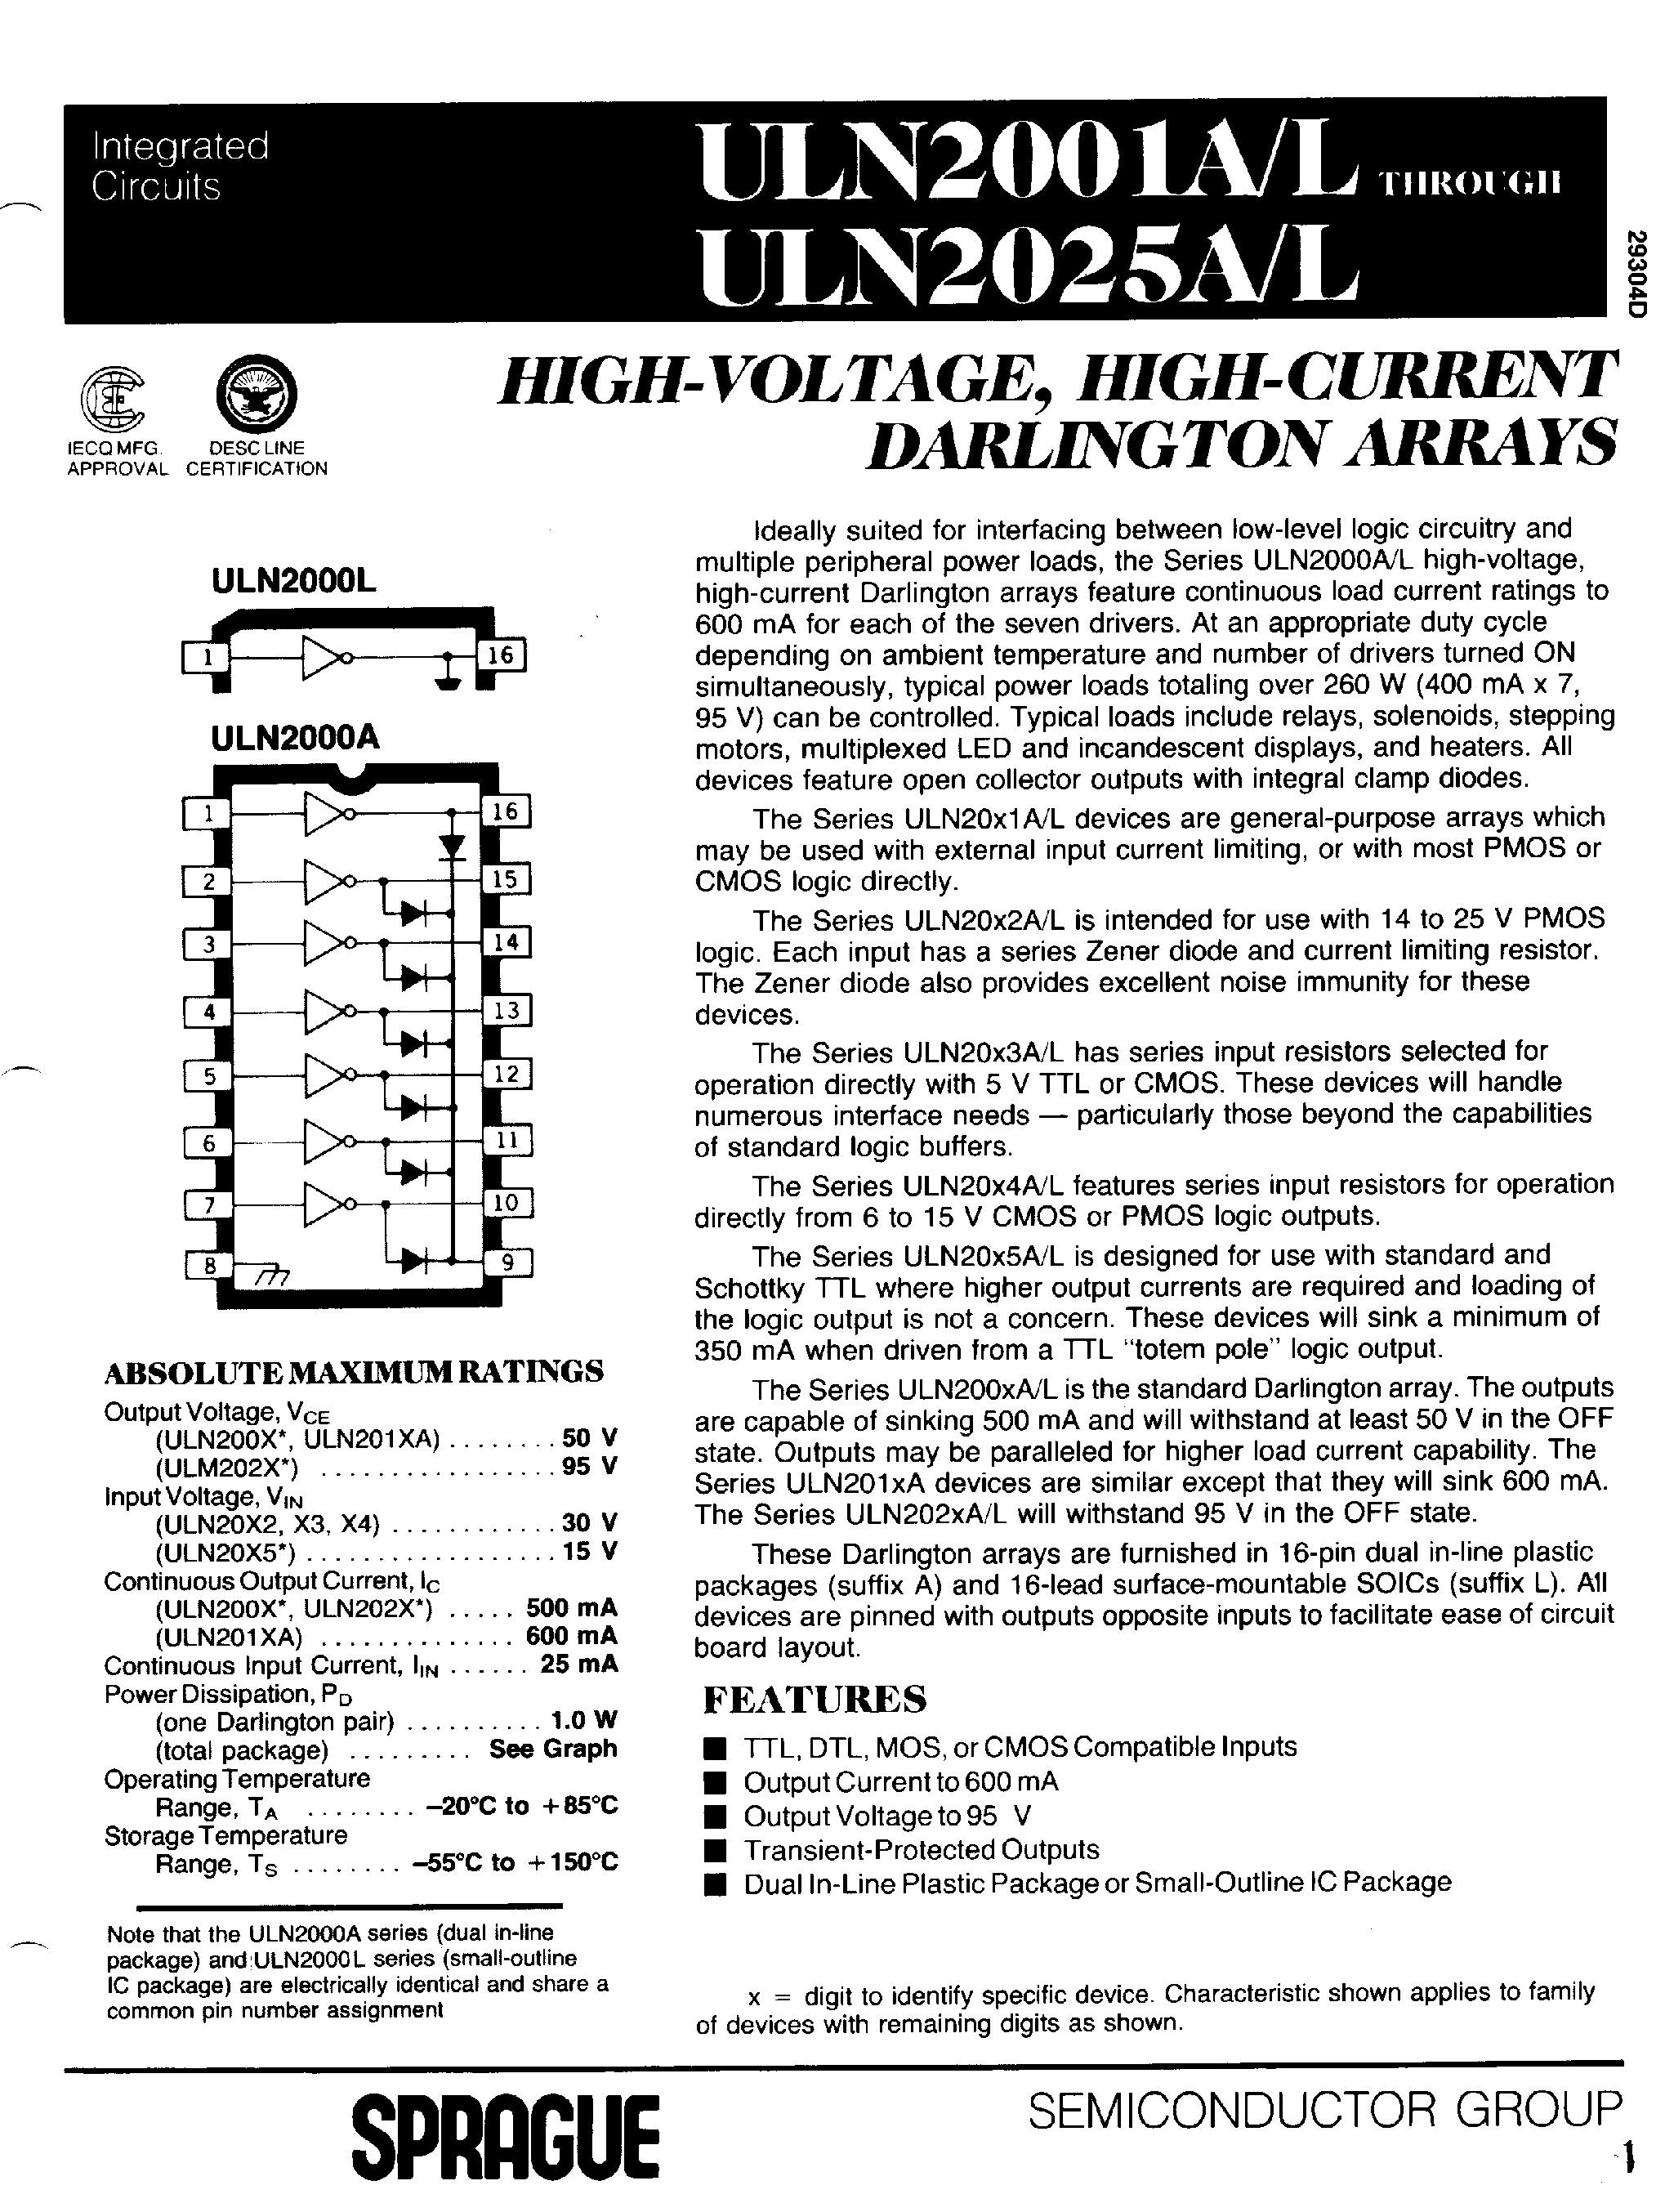 Даташит ULN2005A - (ULN2001A - ULN2005A) High Voltage / High Current Darlington Arrays страница 1